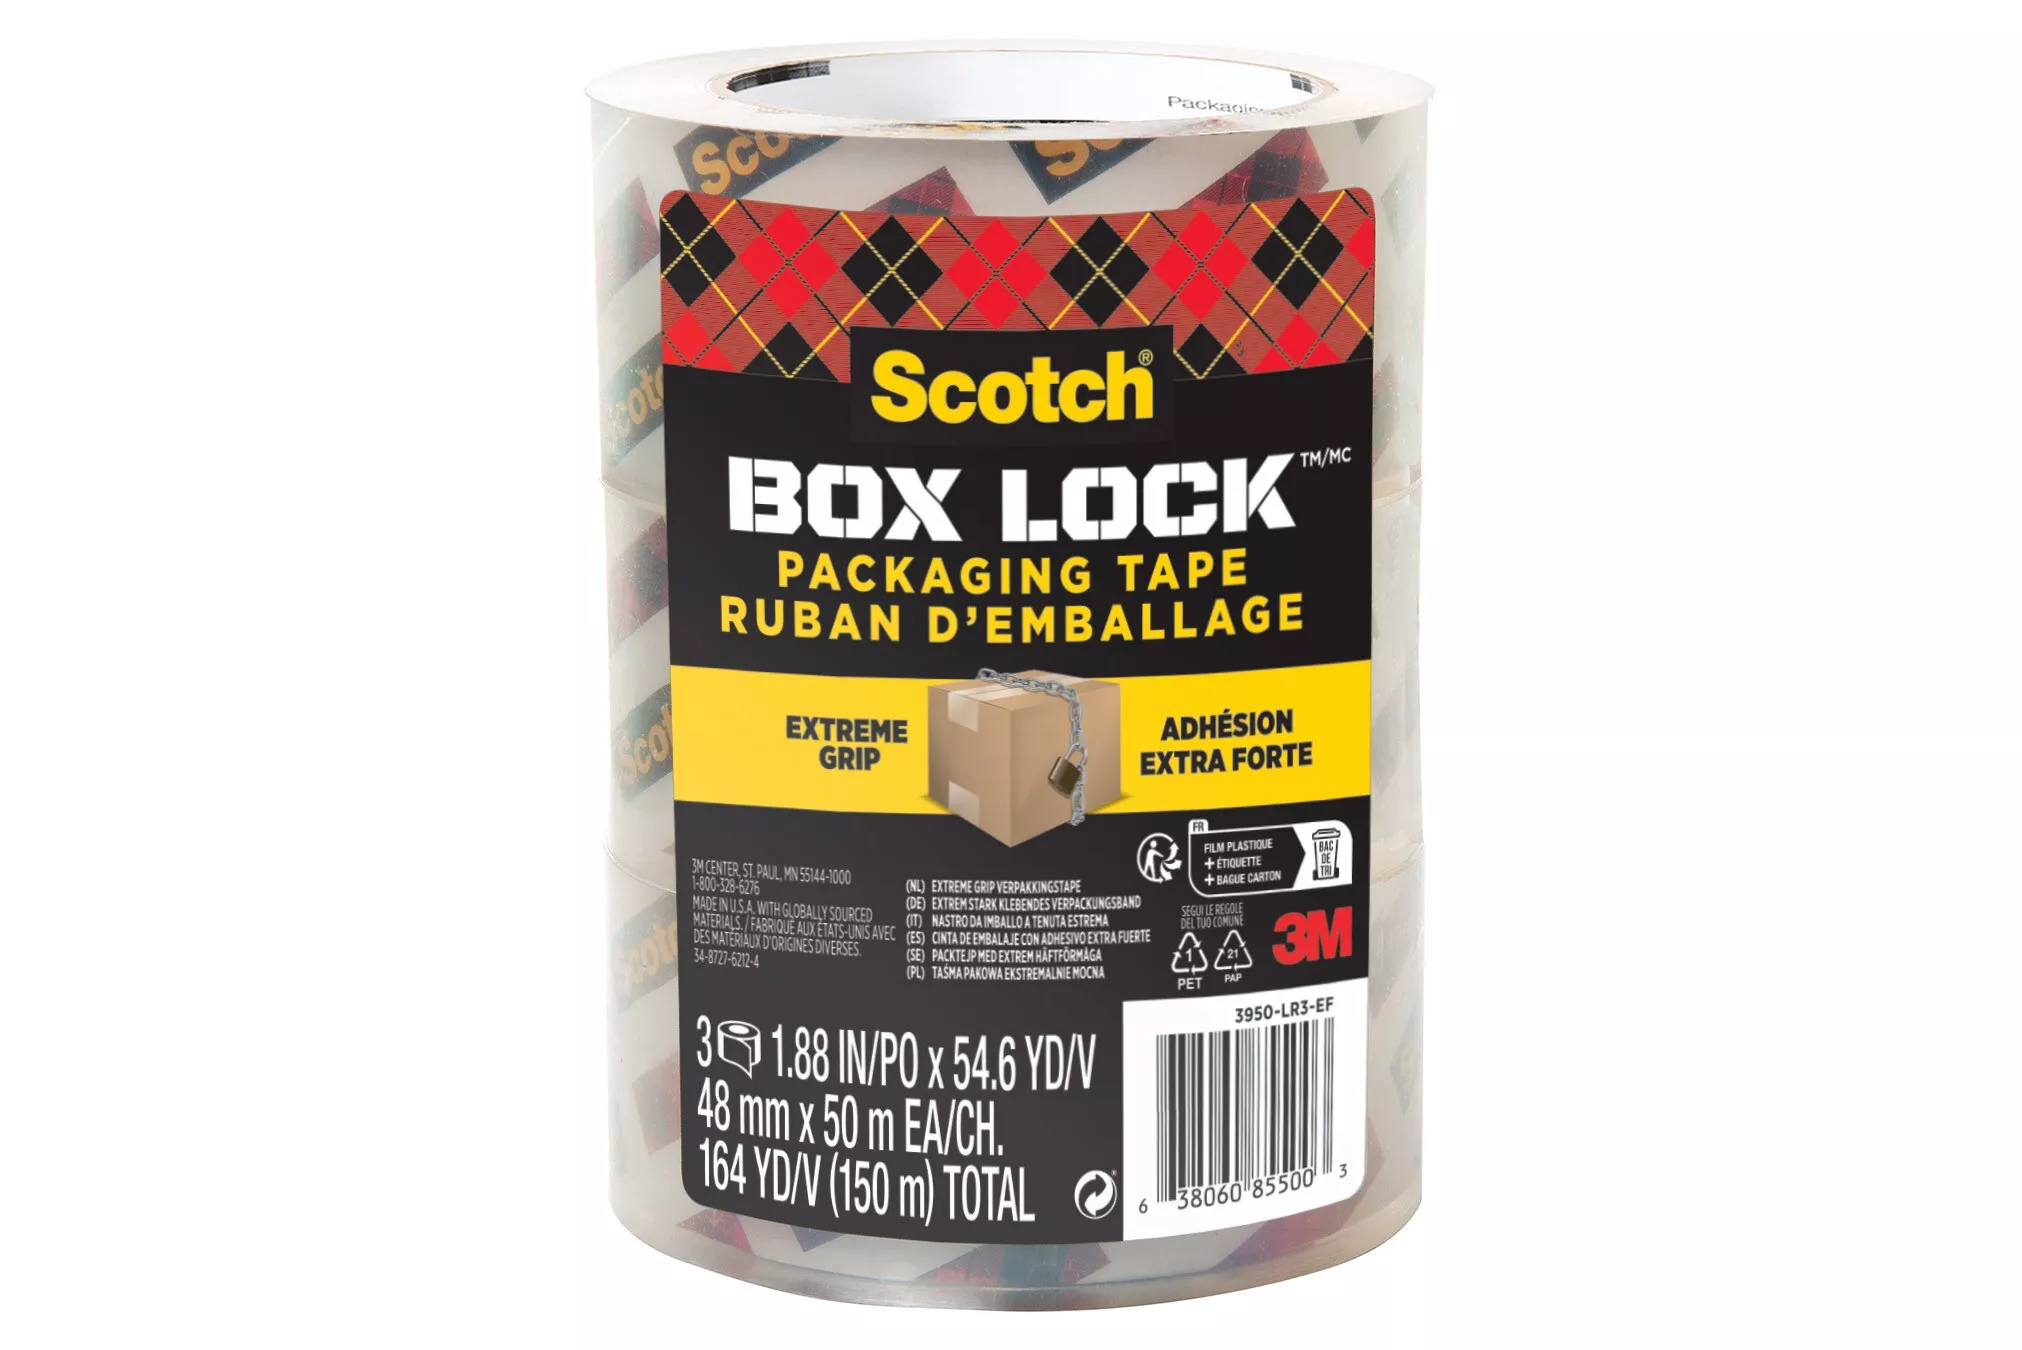 Scotch® Box Lock™ Packaging Tape 3950-LR3-EF, 1.88 in x 54.6 yd (48 mm x 50 m), 3 Pack